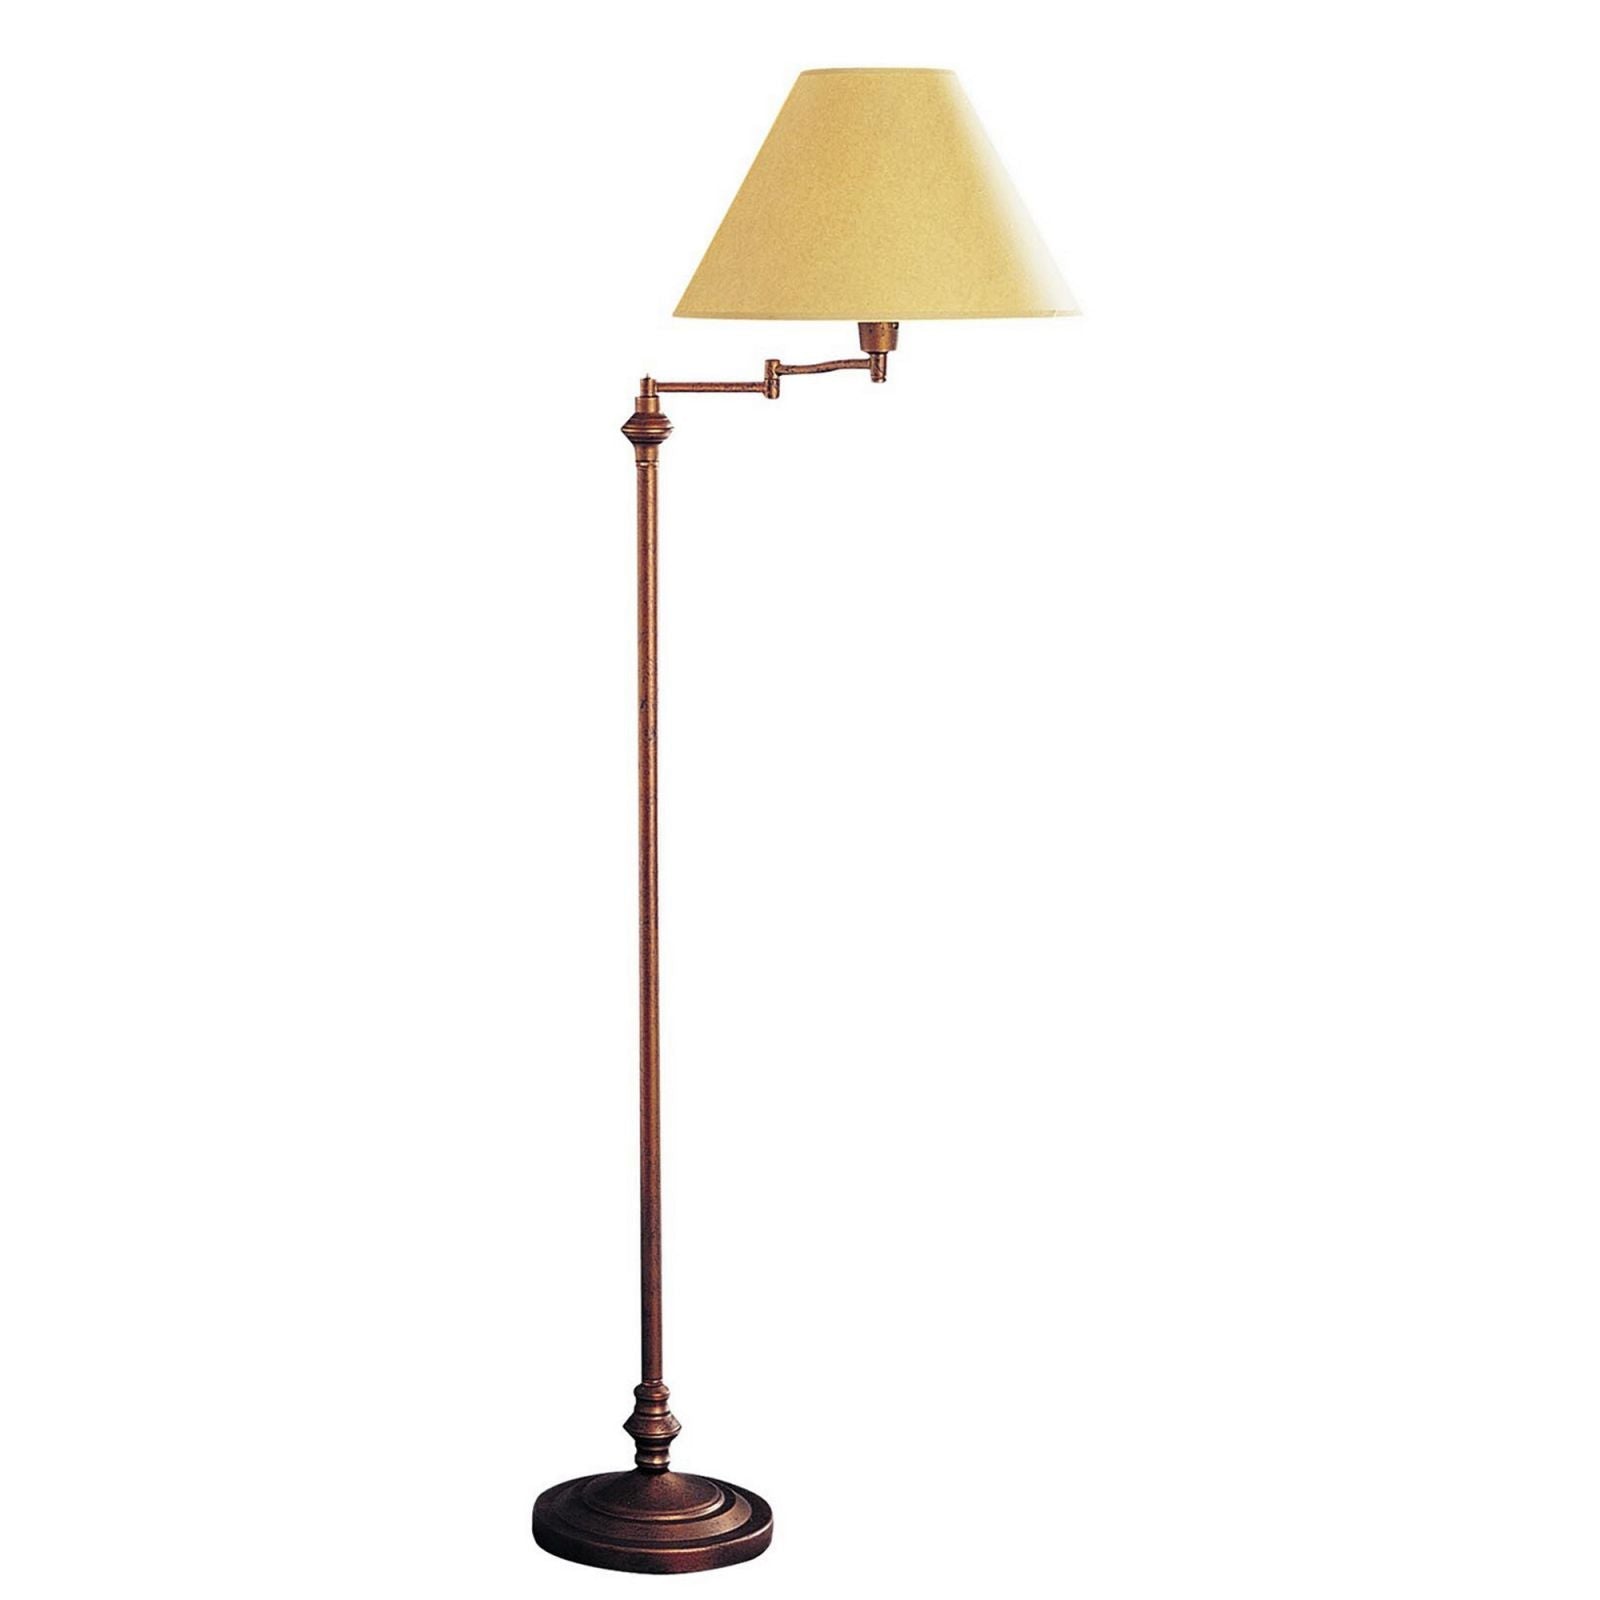 150 Watt Metal Floor Lamp With Swing Arm And Fabric Conical Shade, Bronze By Benzara